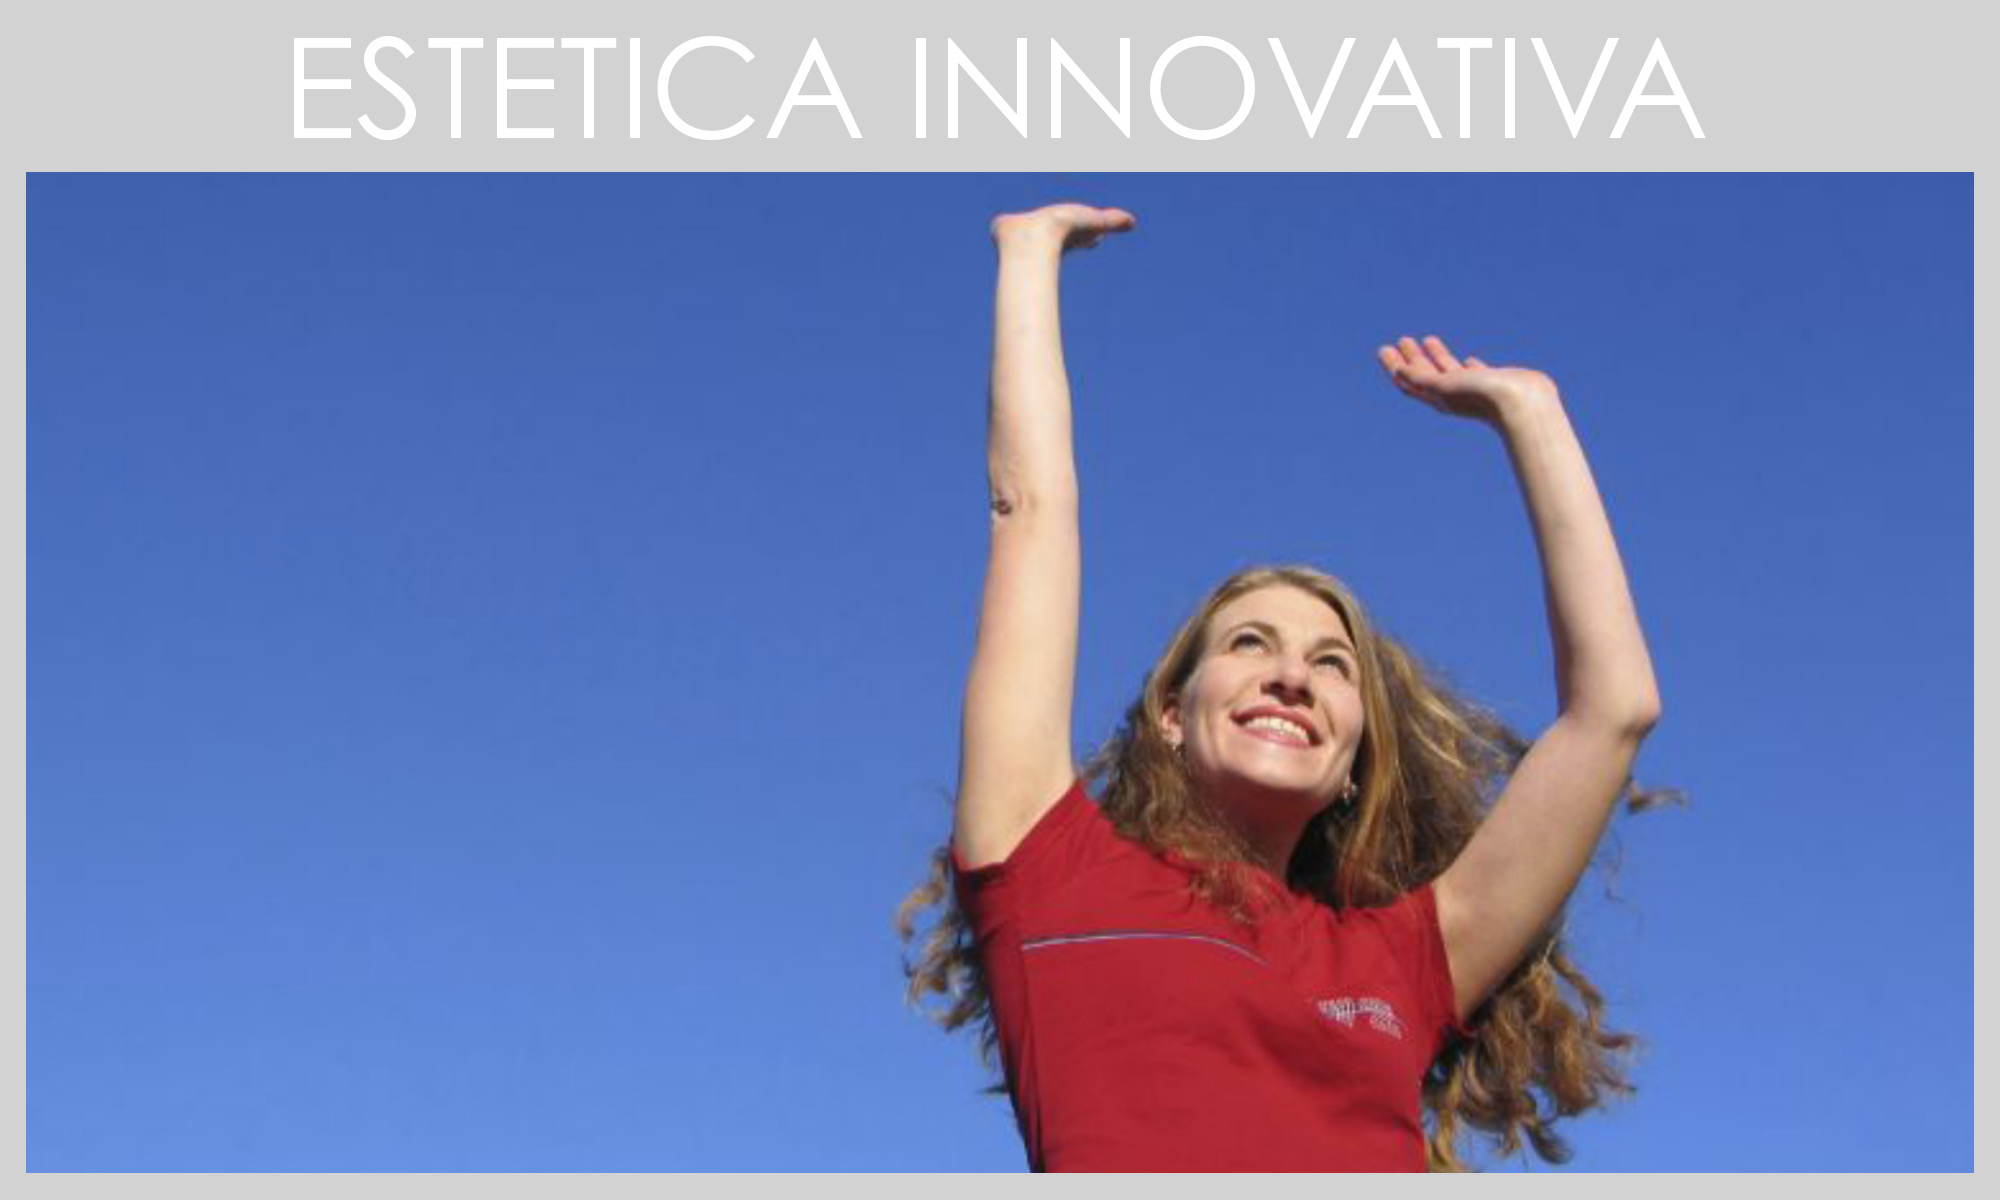 ESTETICA-innovativa-a2-def